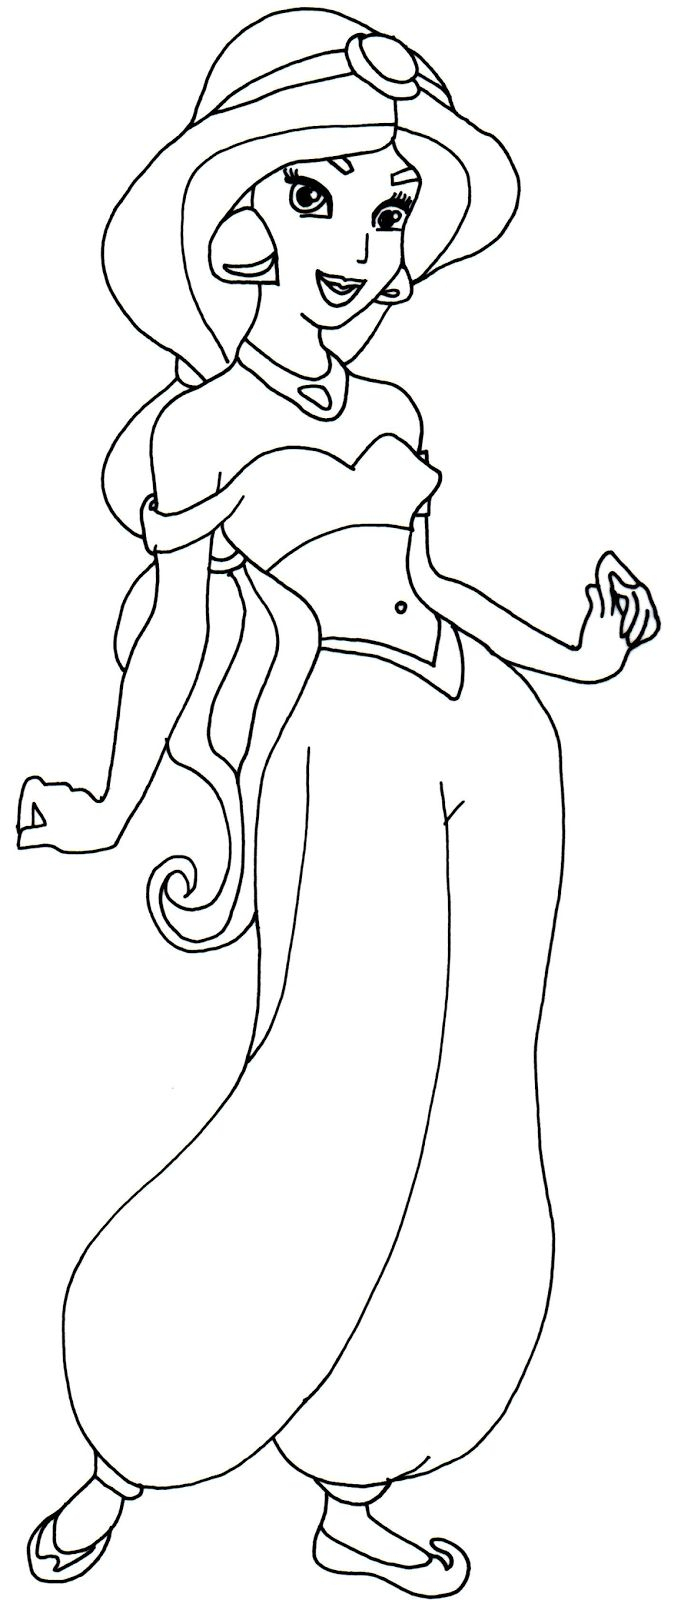 Princess Jasmine Coloring Pages At Getdrawings | Free Download tout Coloriage Princesse Jasmine